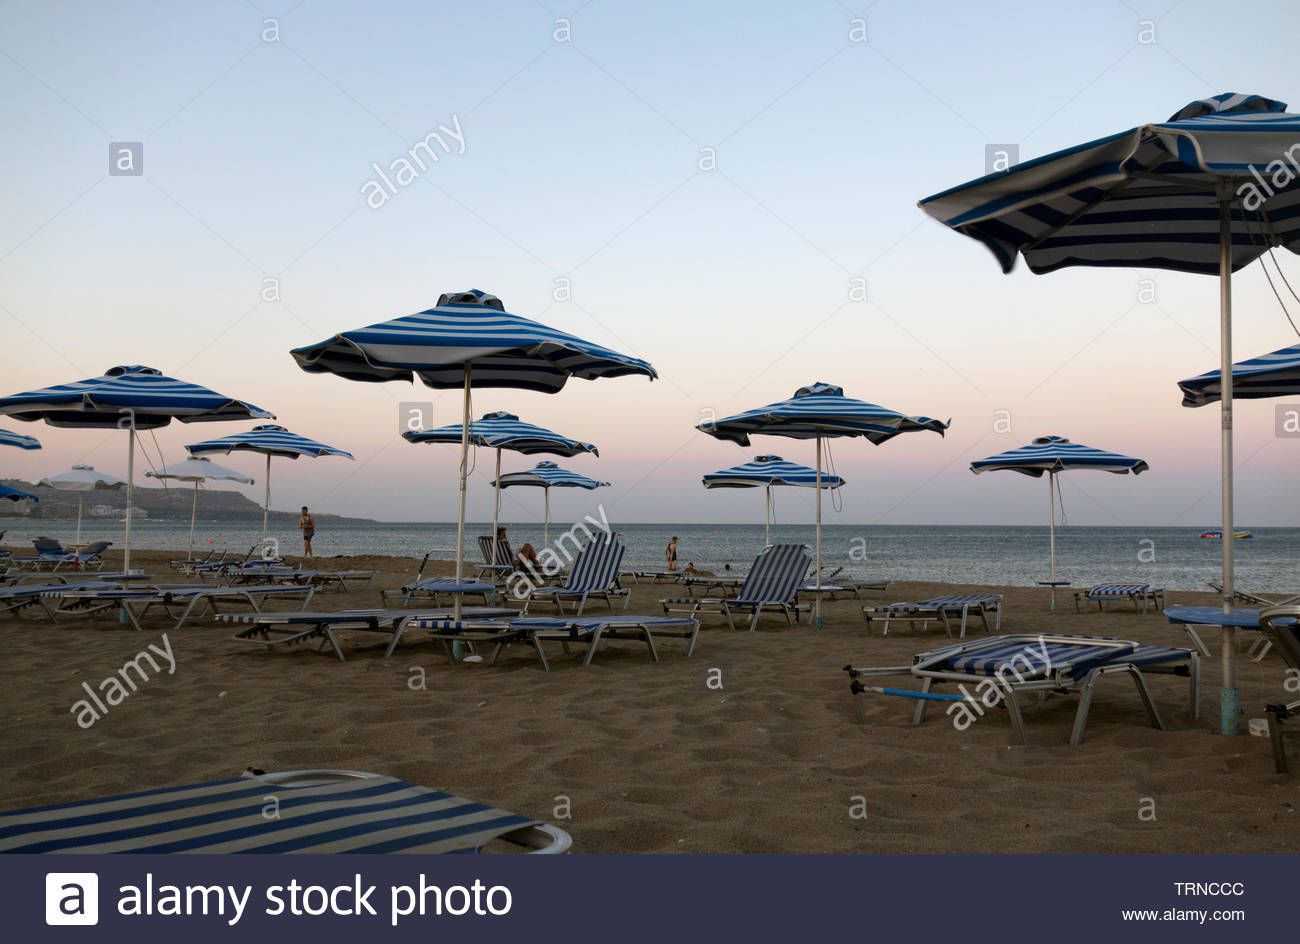 Beach Loungers And Umbrella Shades Stock Photos Beach